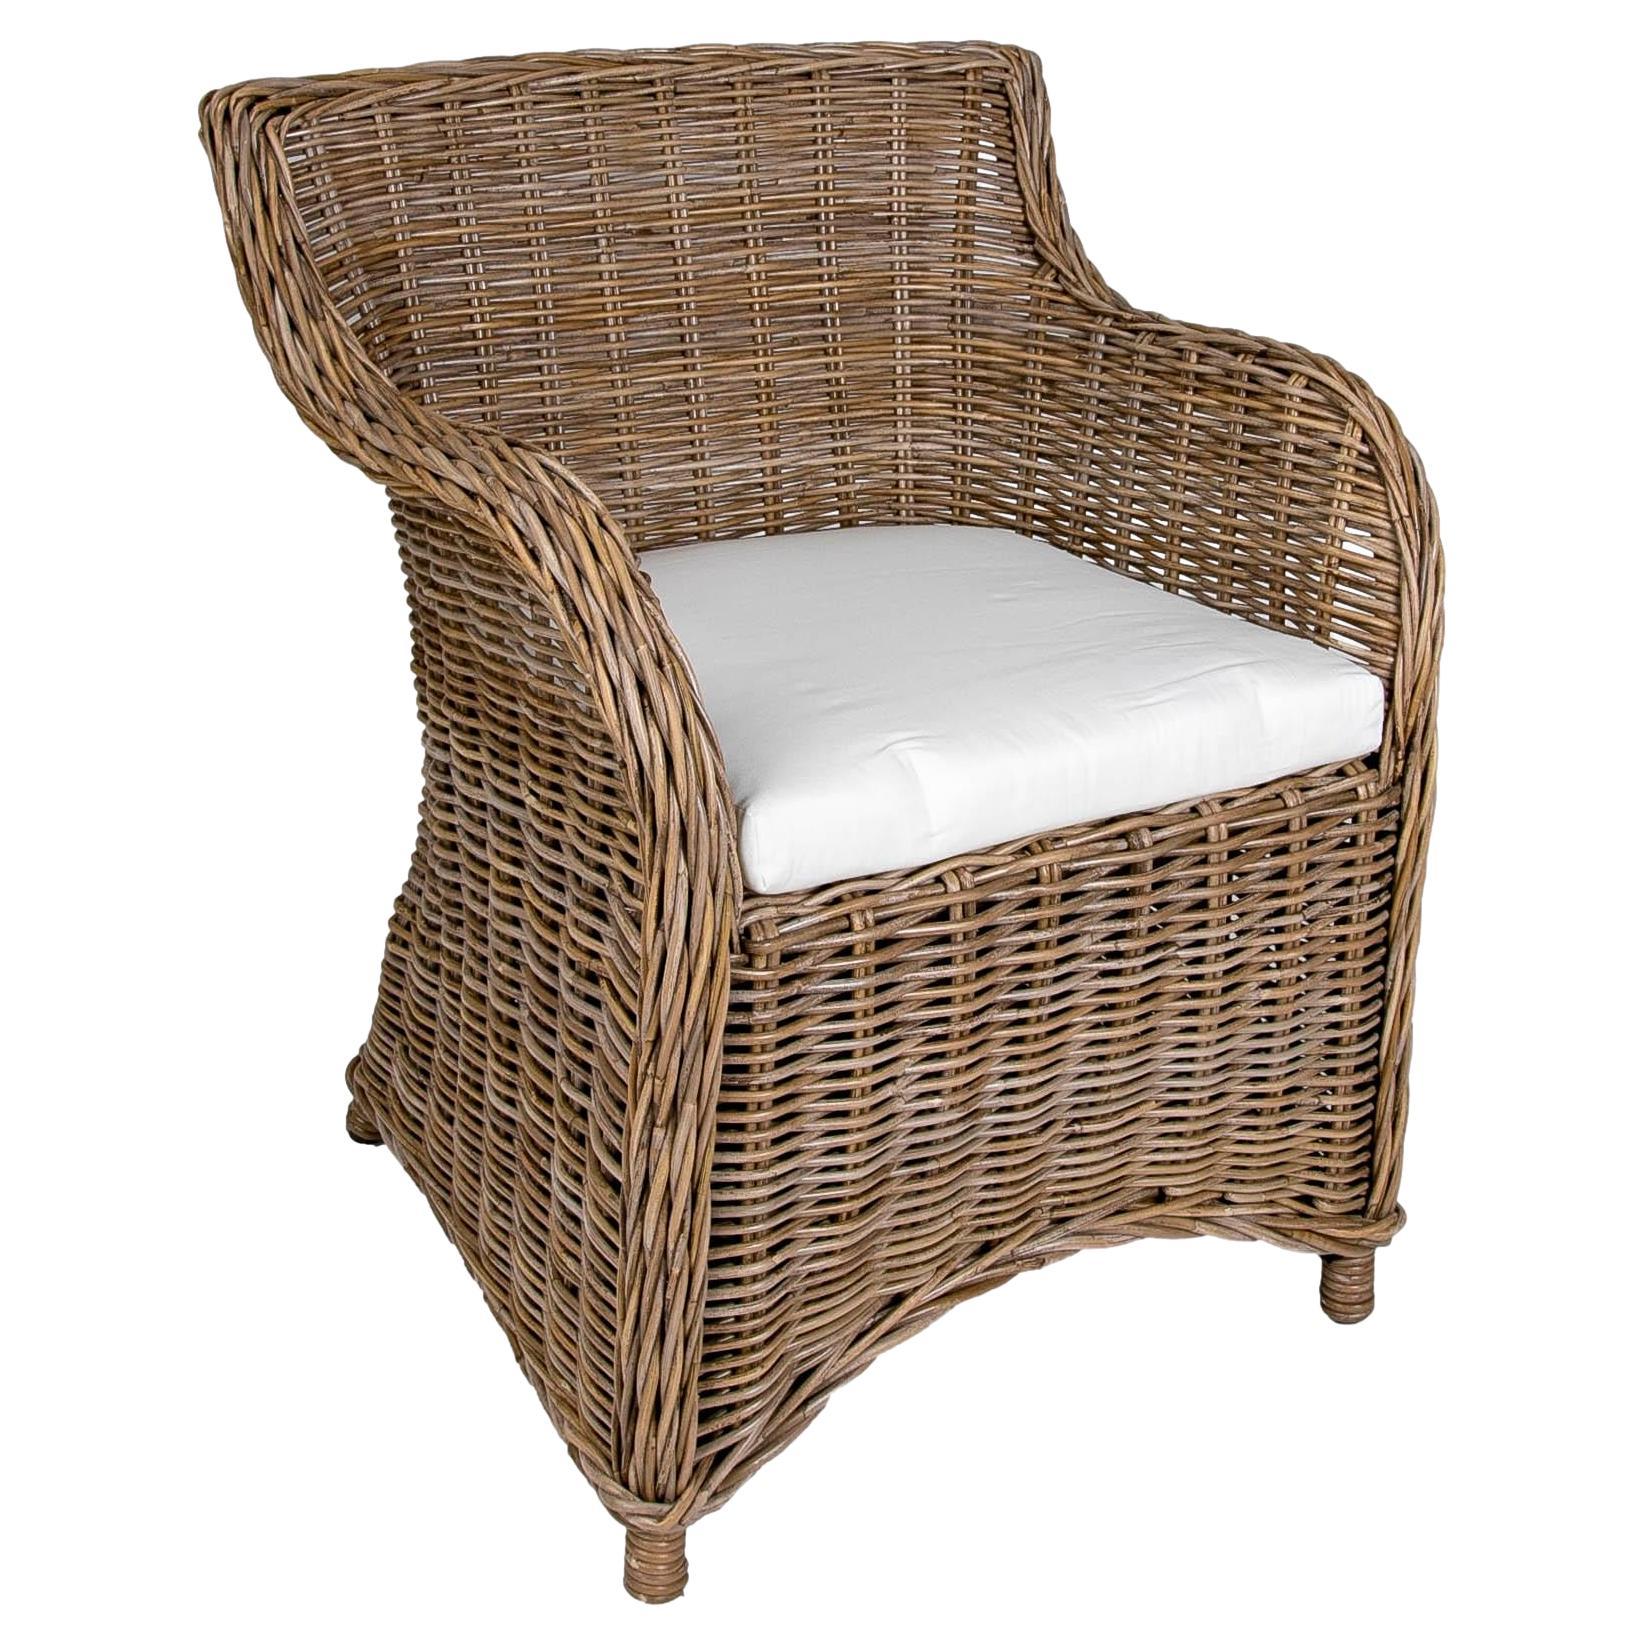  Rattan Garden Chair with Cushion in Greyish Tone For Sale